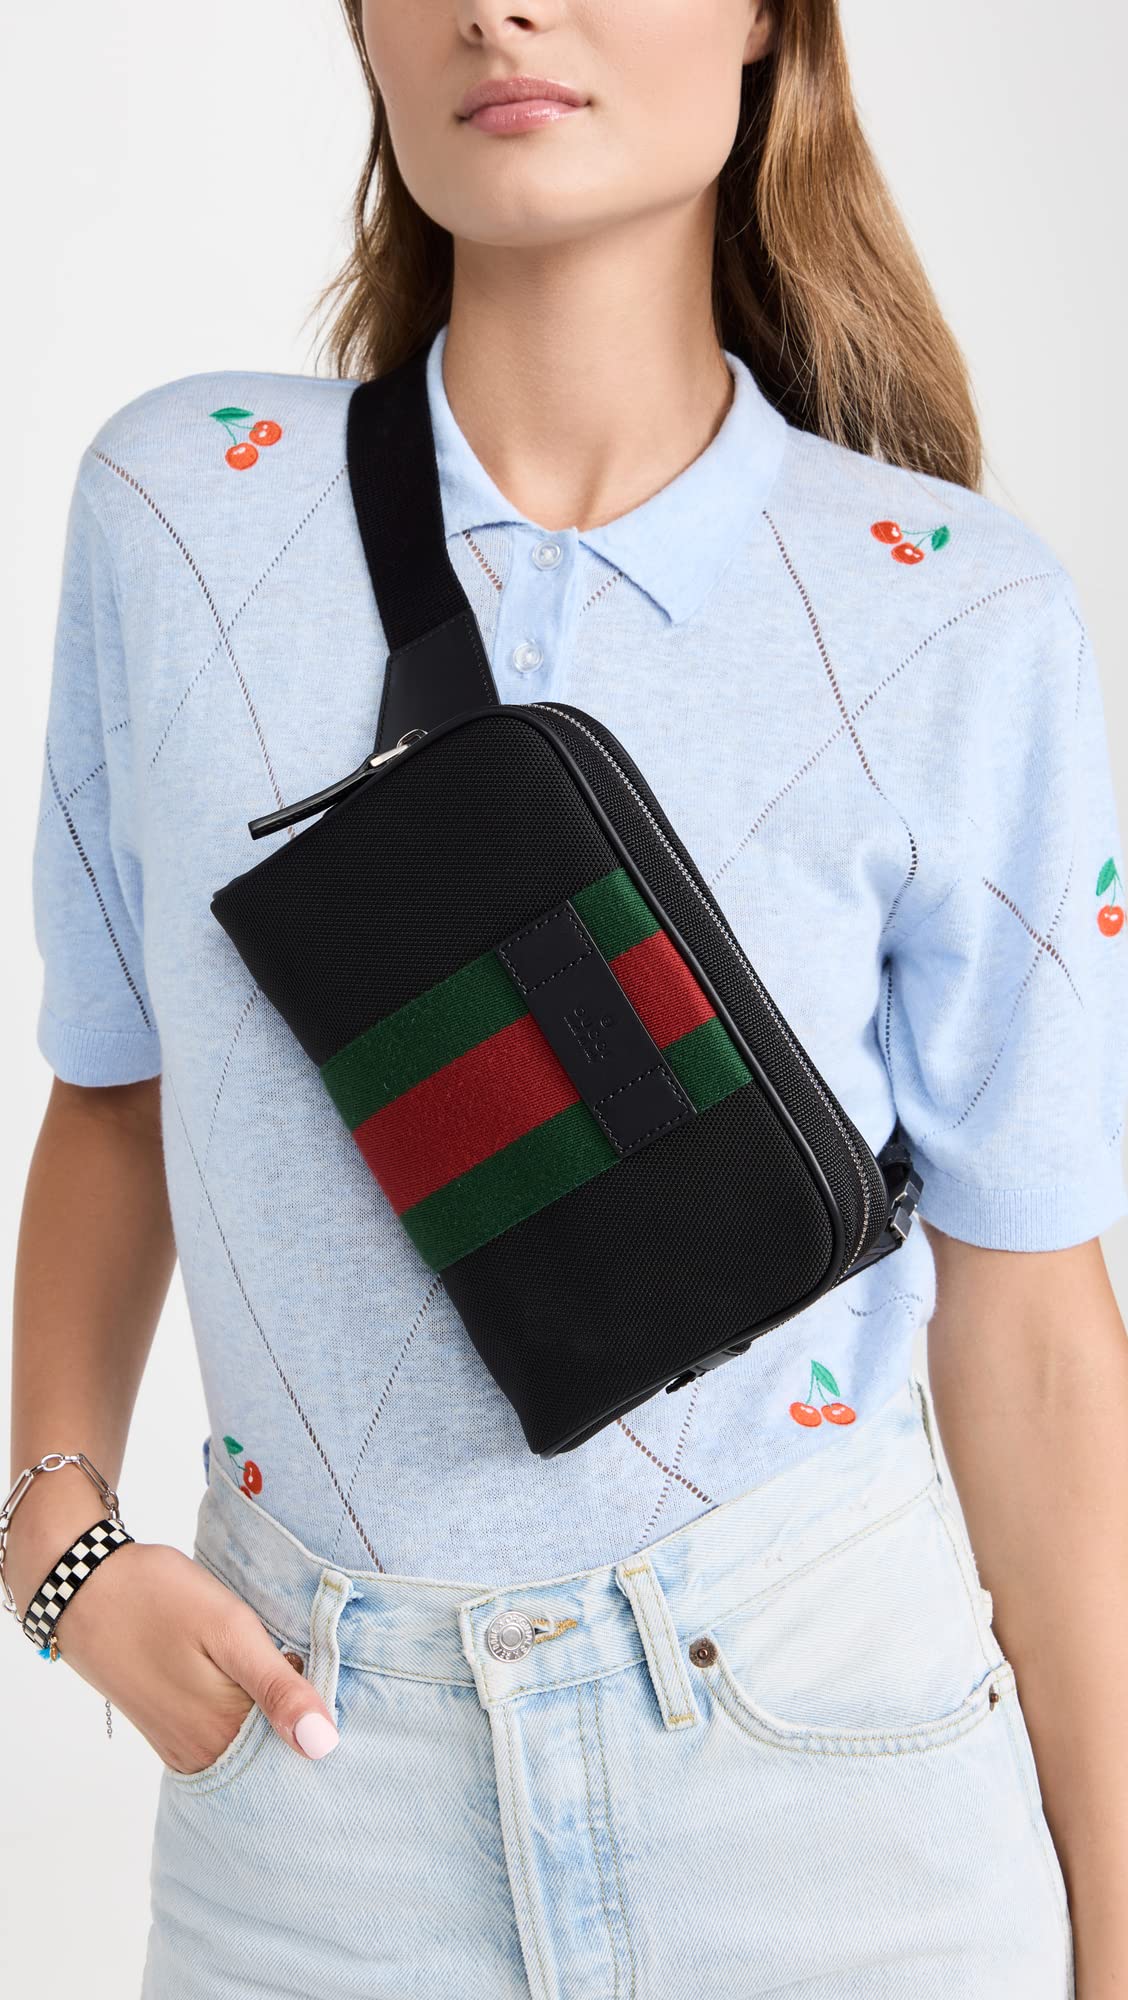 Shopbop Archive Women's Pre-Loved Gucci Zip Top Web Belt Bag, Black, One Size